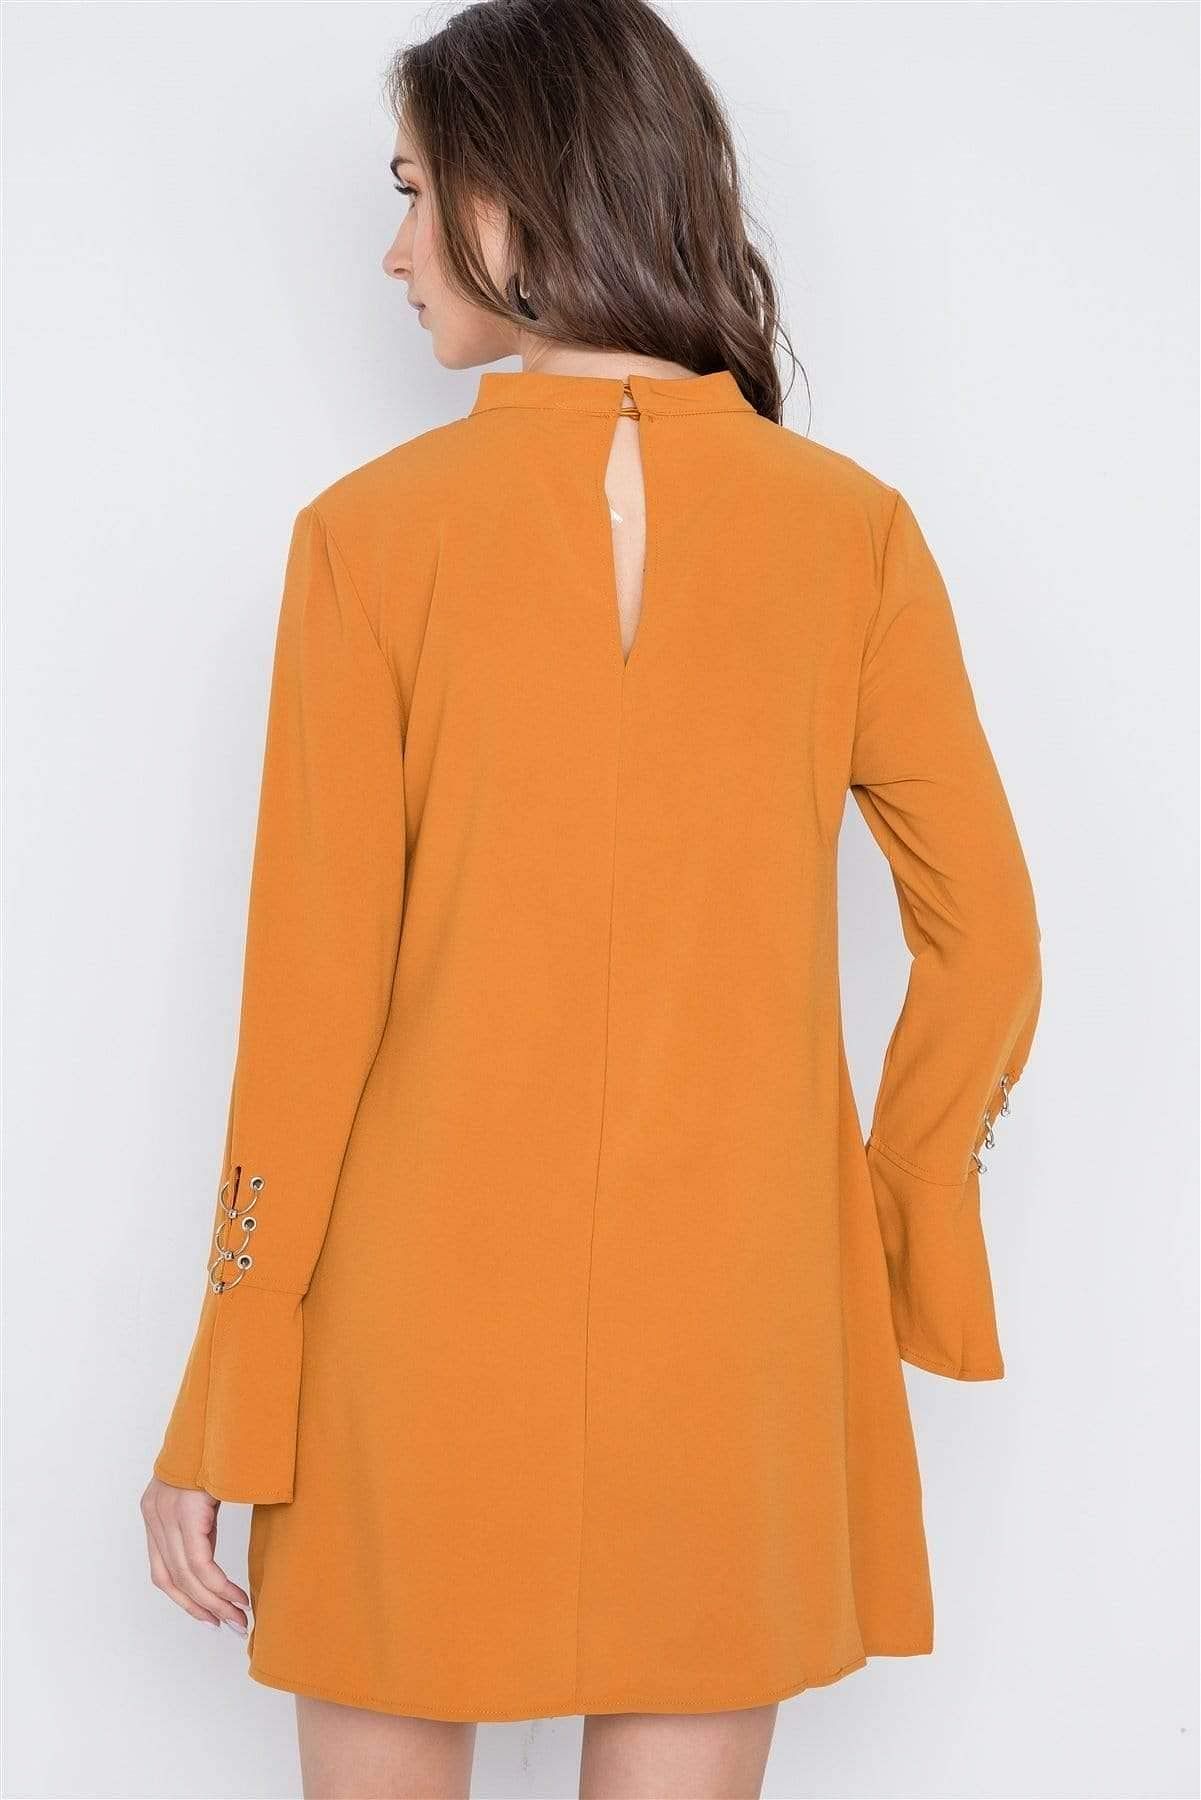 Camel Long Sleeve V-Neck Mini Dress - Shopping Therapy S dress